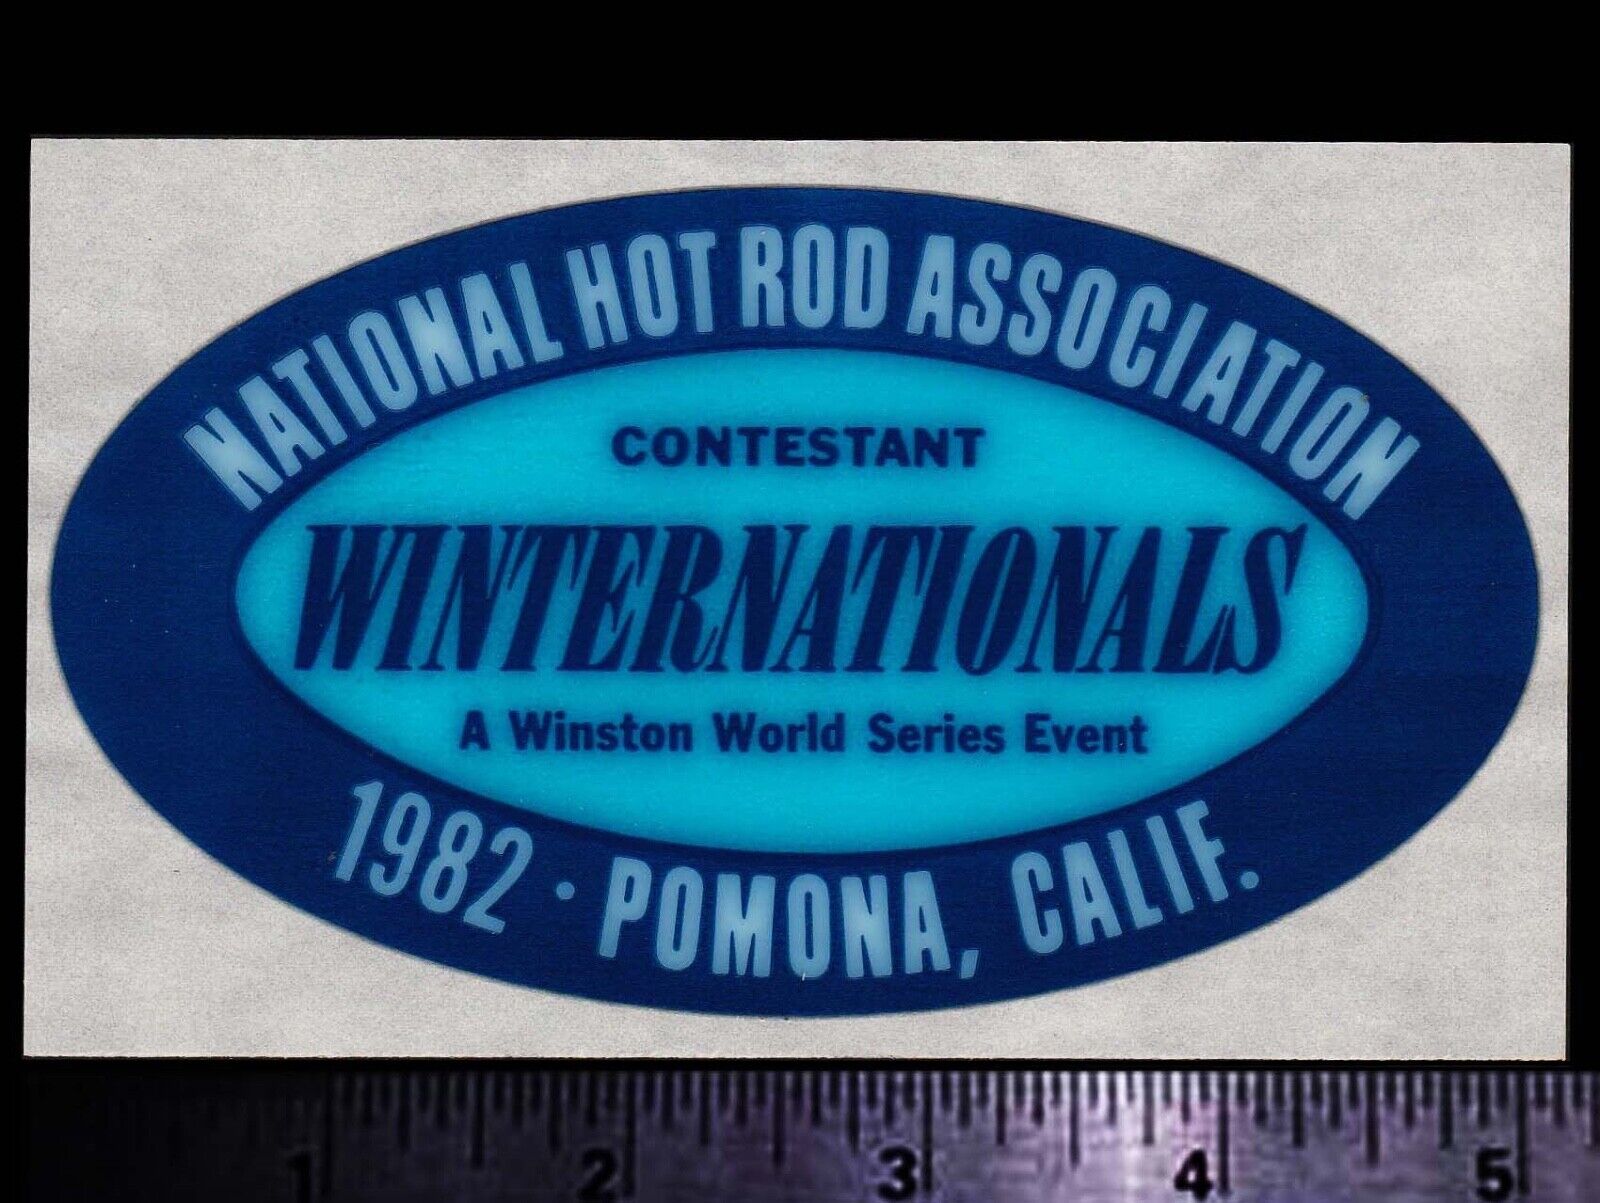 NHRA Winternationals Pomona Calif. 1982 - Original Vintage Racing Decal/Sticker